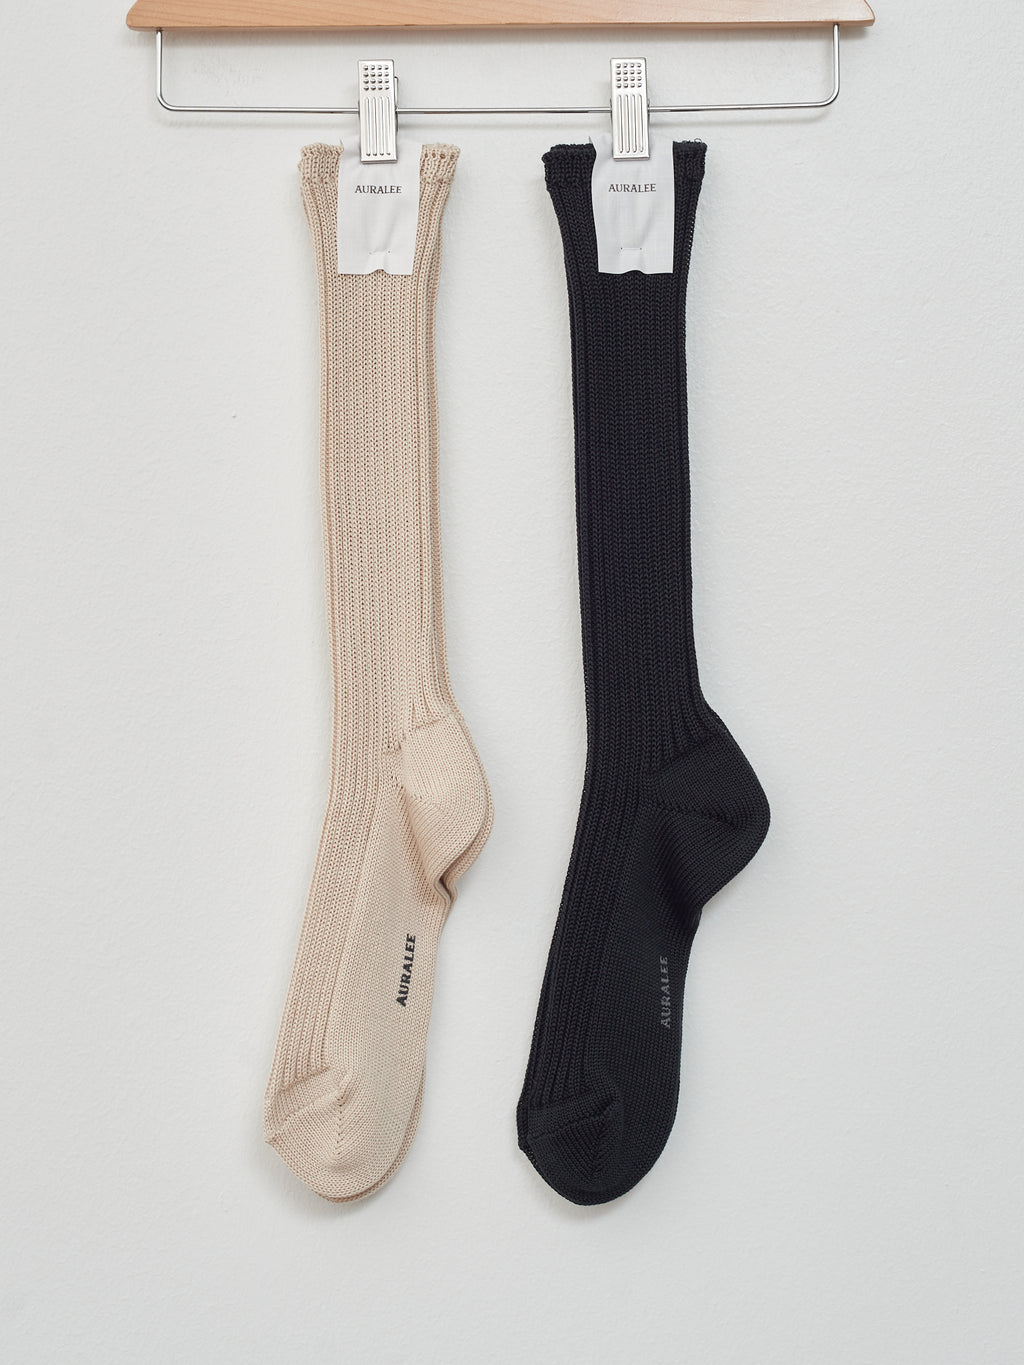 Namu Shop - Auralee Cotton Rib Low Gauge Socks - Beige